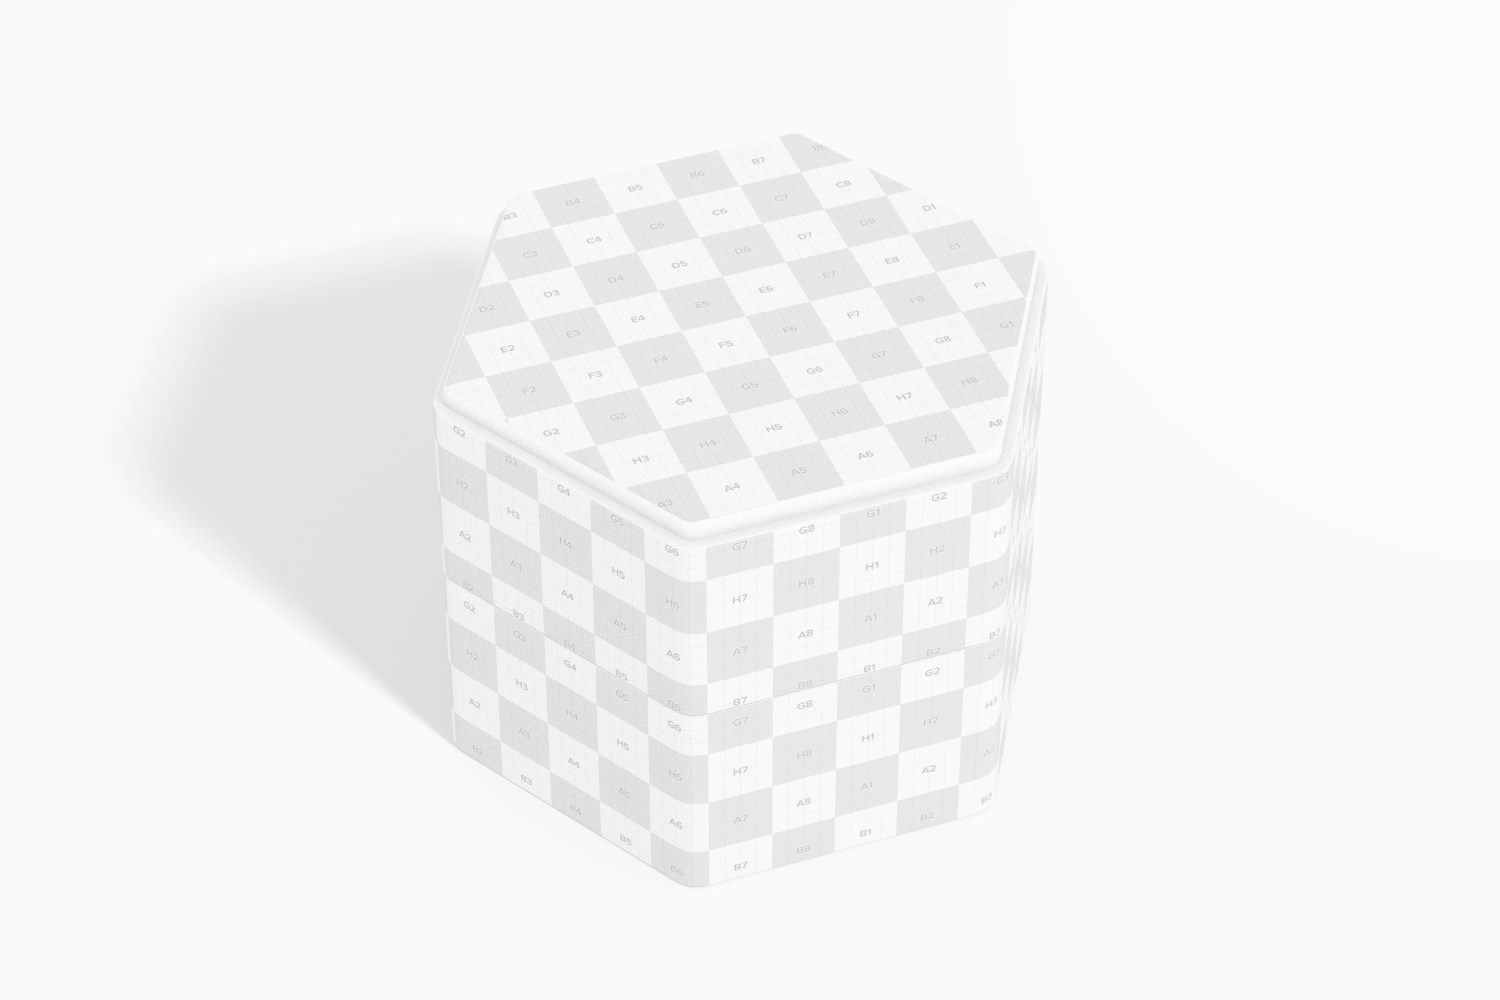 Hexagonal Ring Box Mockup, Perspective